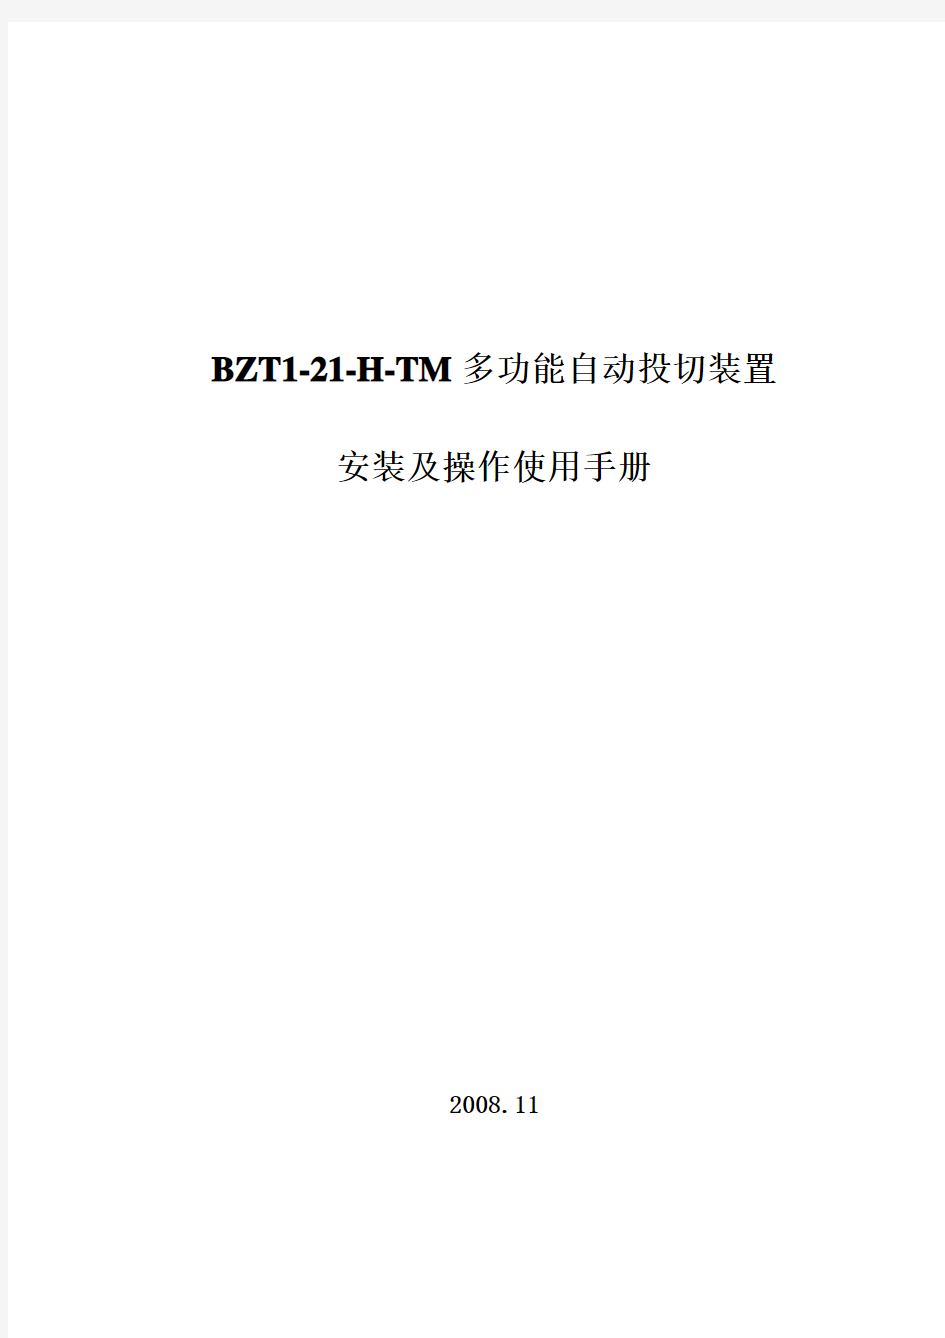 BZT1-21-H-TM使用手册(基本型)朝阳局用000000